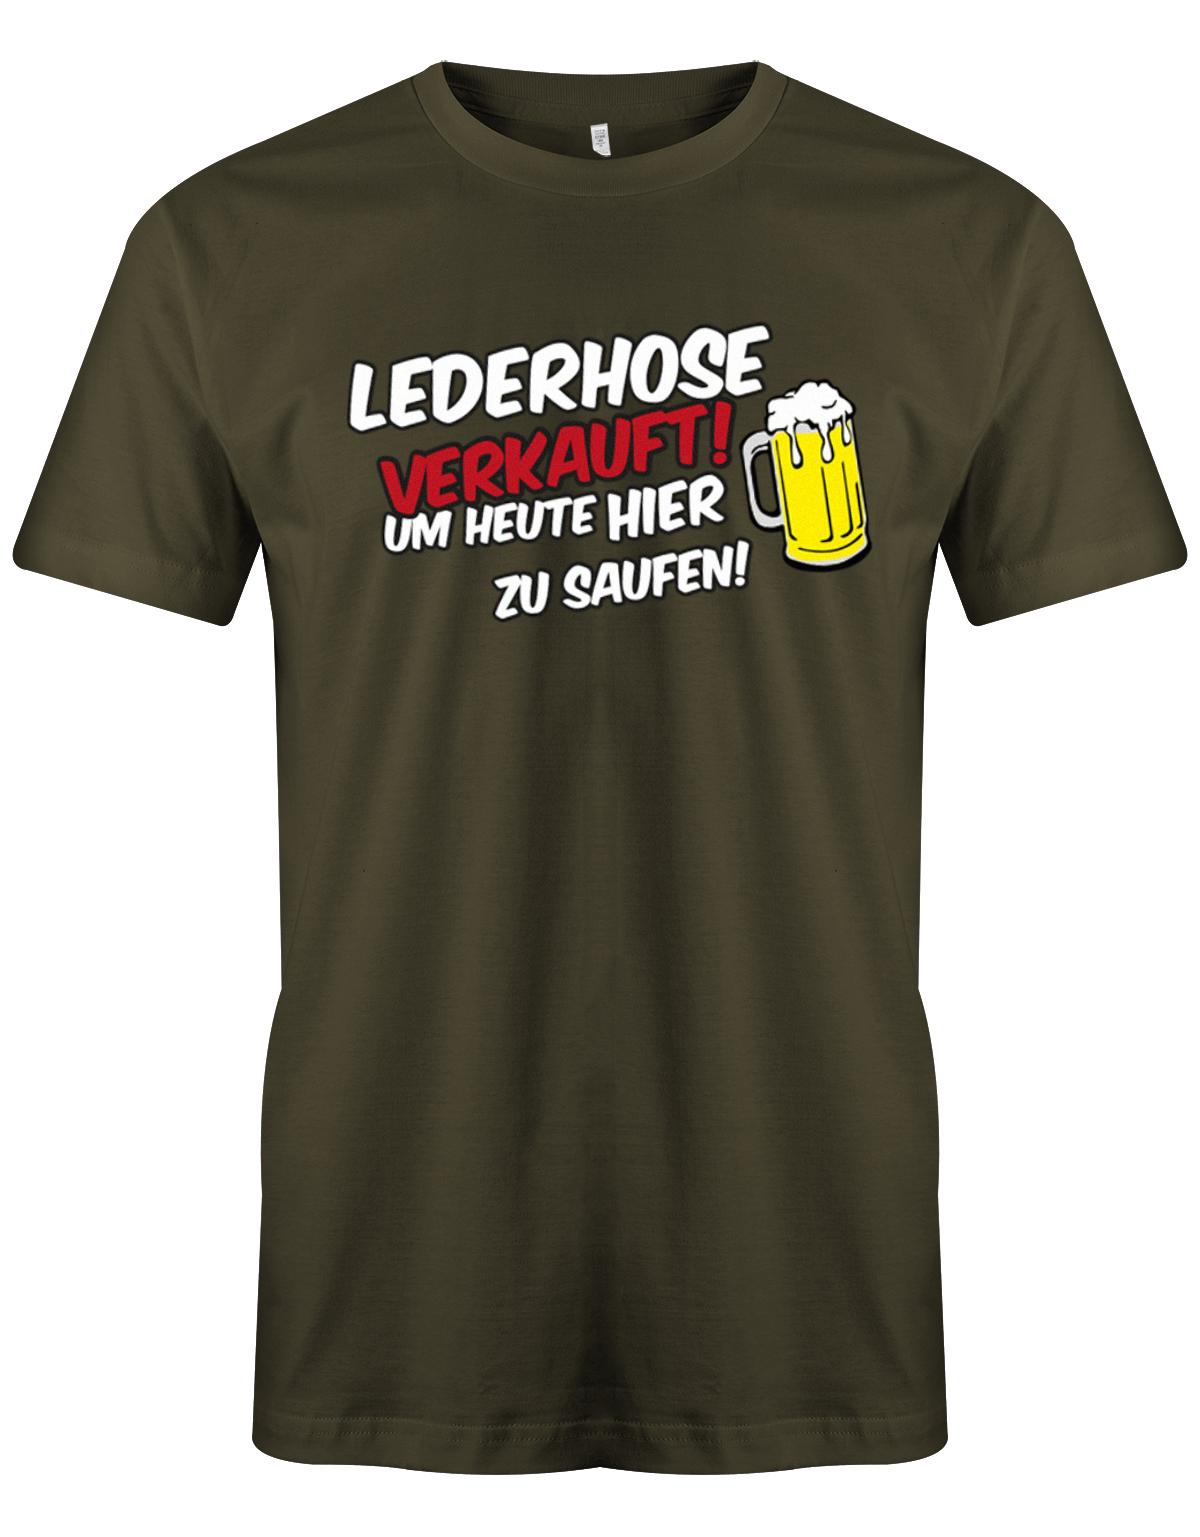 lederhose-verkauft-um-heute-hier-zu-saufen-herren-Shirt-Army